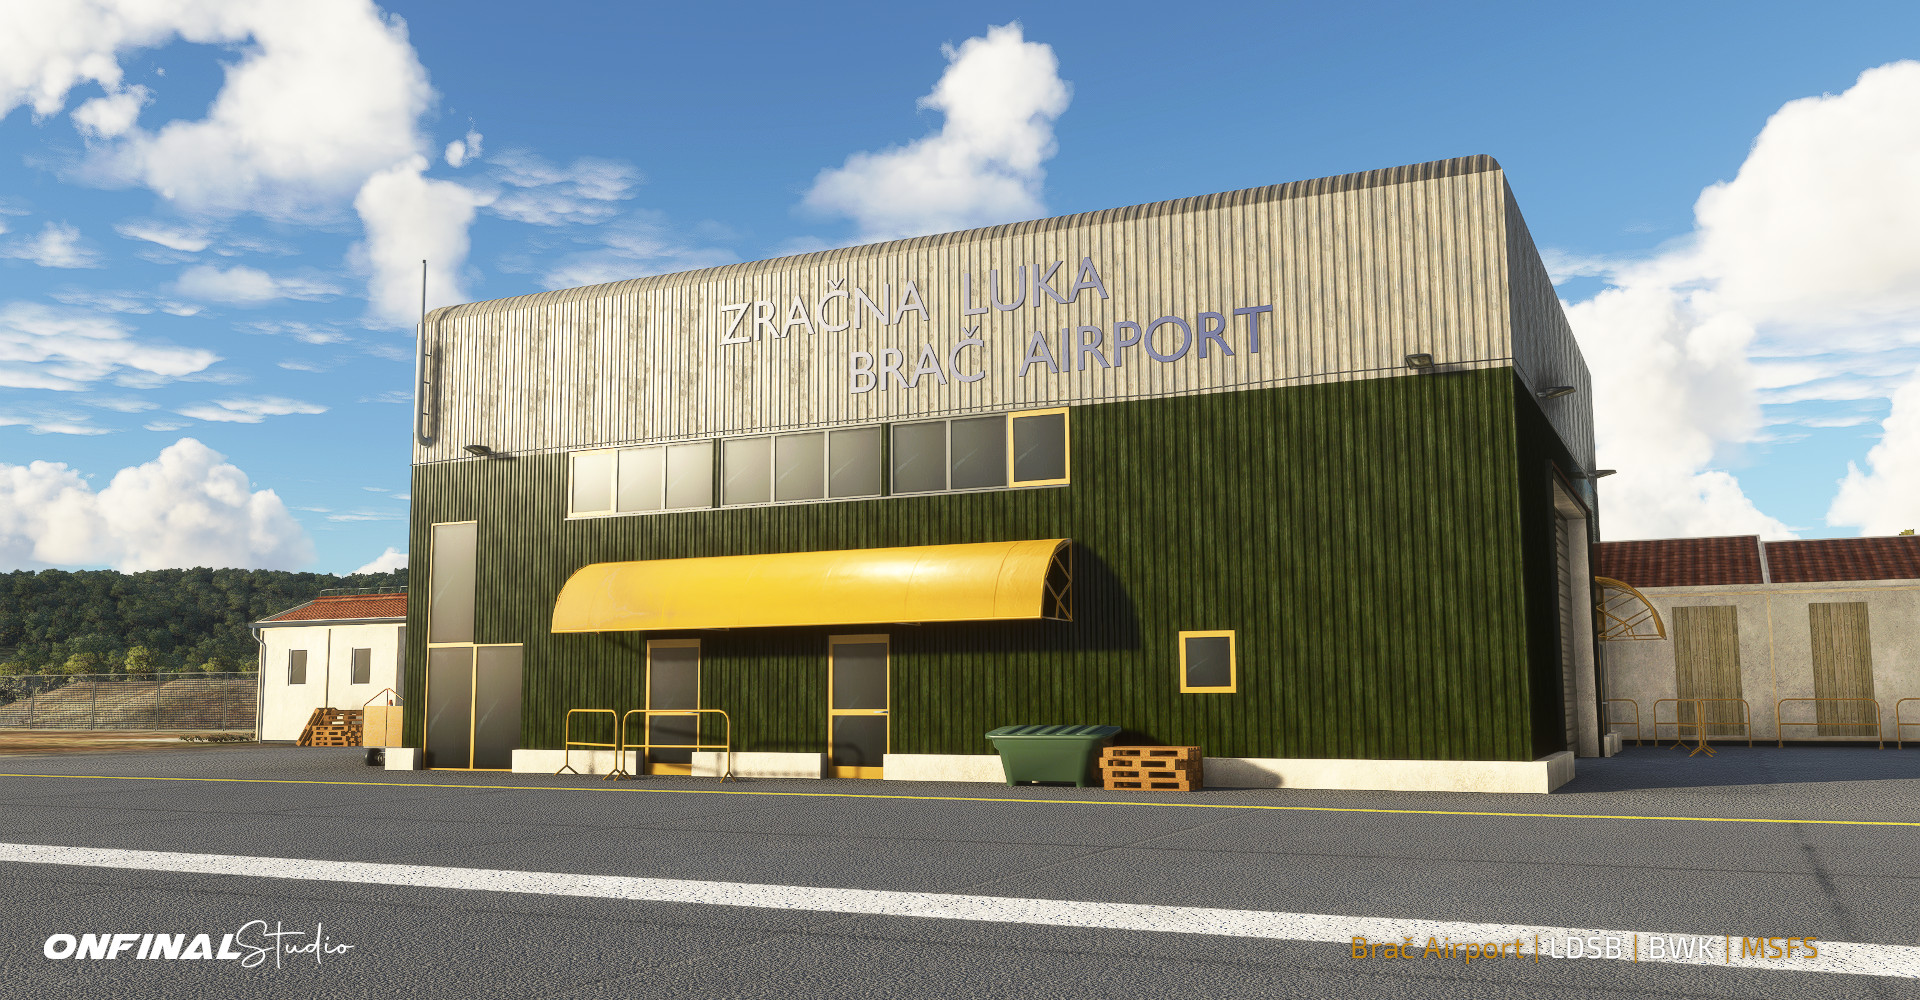 Bol Brac Airport LDSB Scenery MSFS Bol Microsoft Flight Simulator 2020 P3D Prepar3d